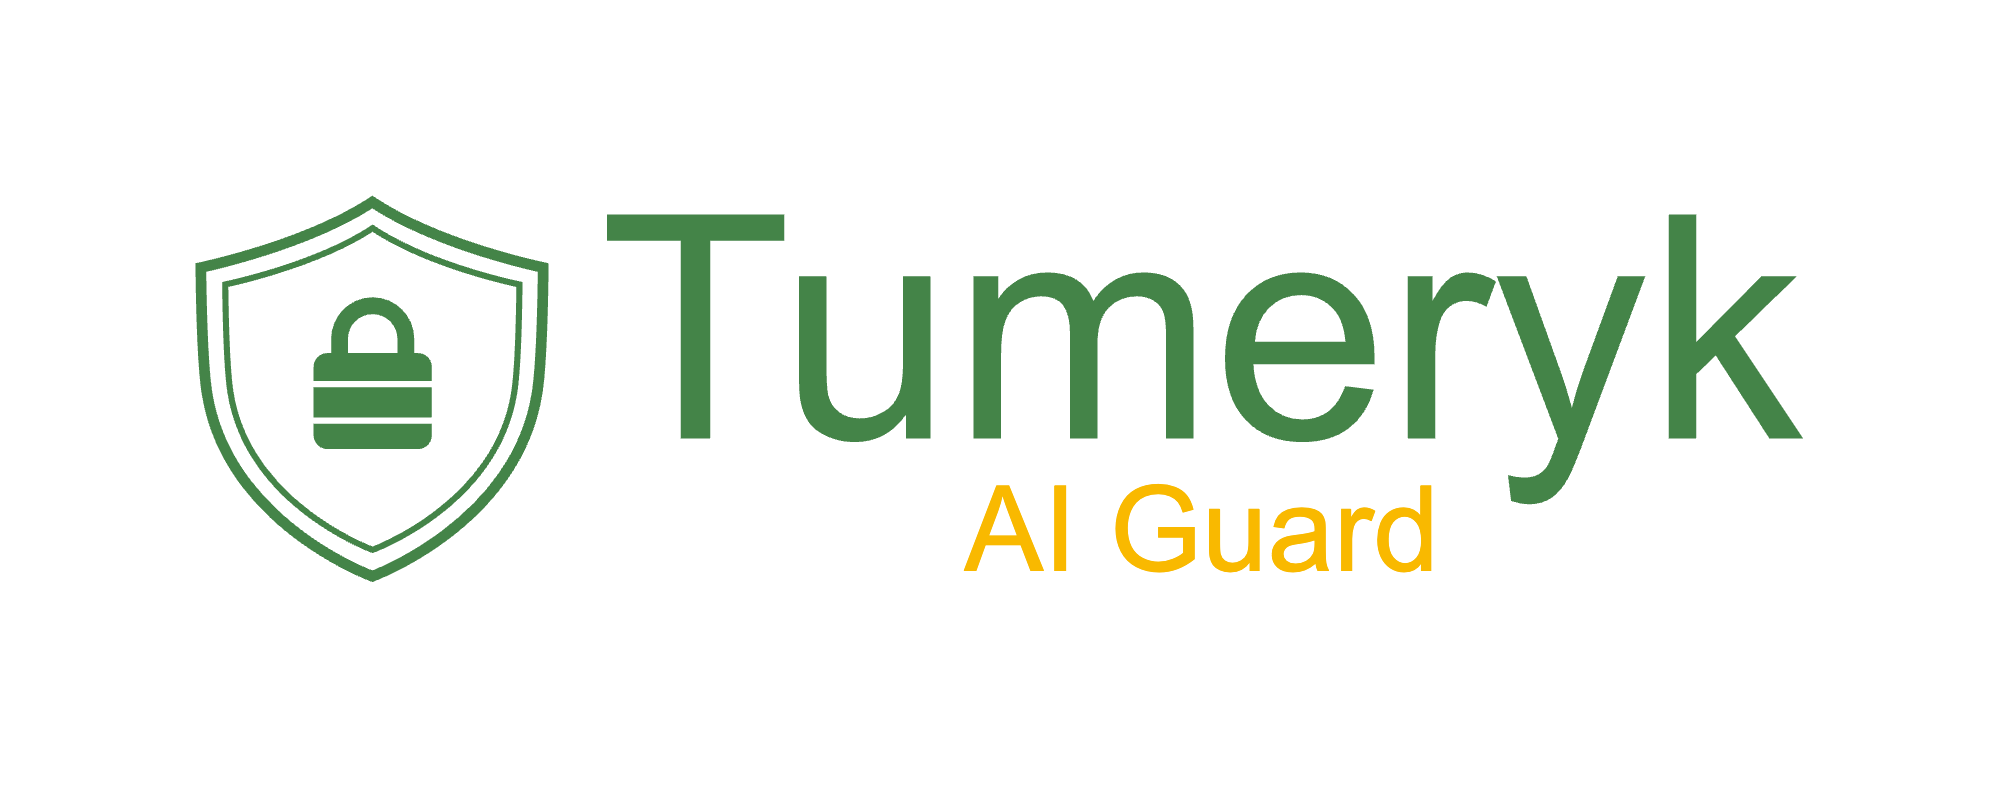 Tumeryk-logo.png